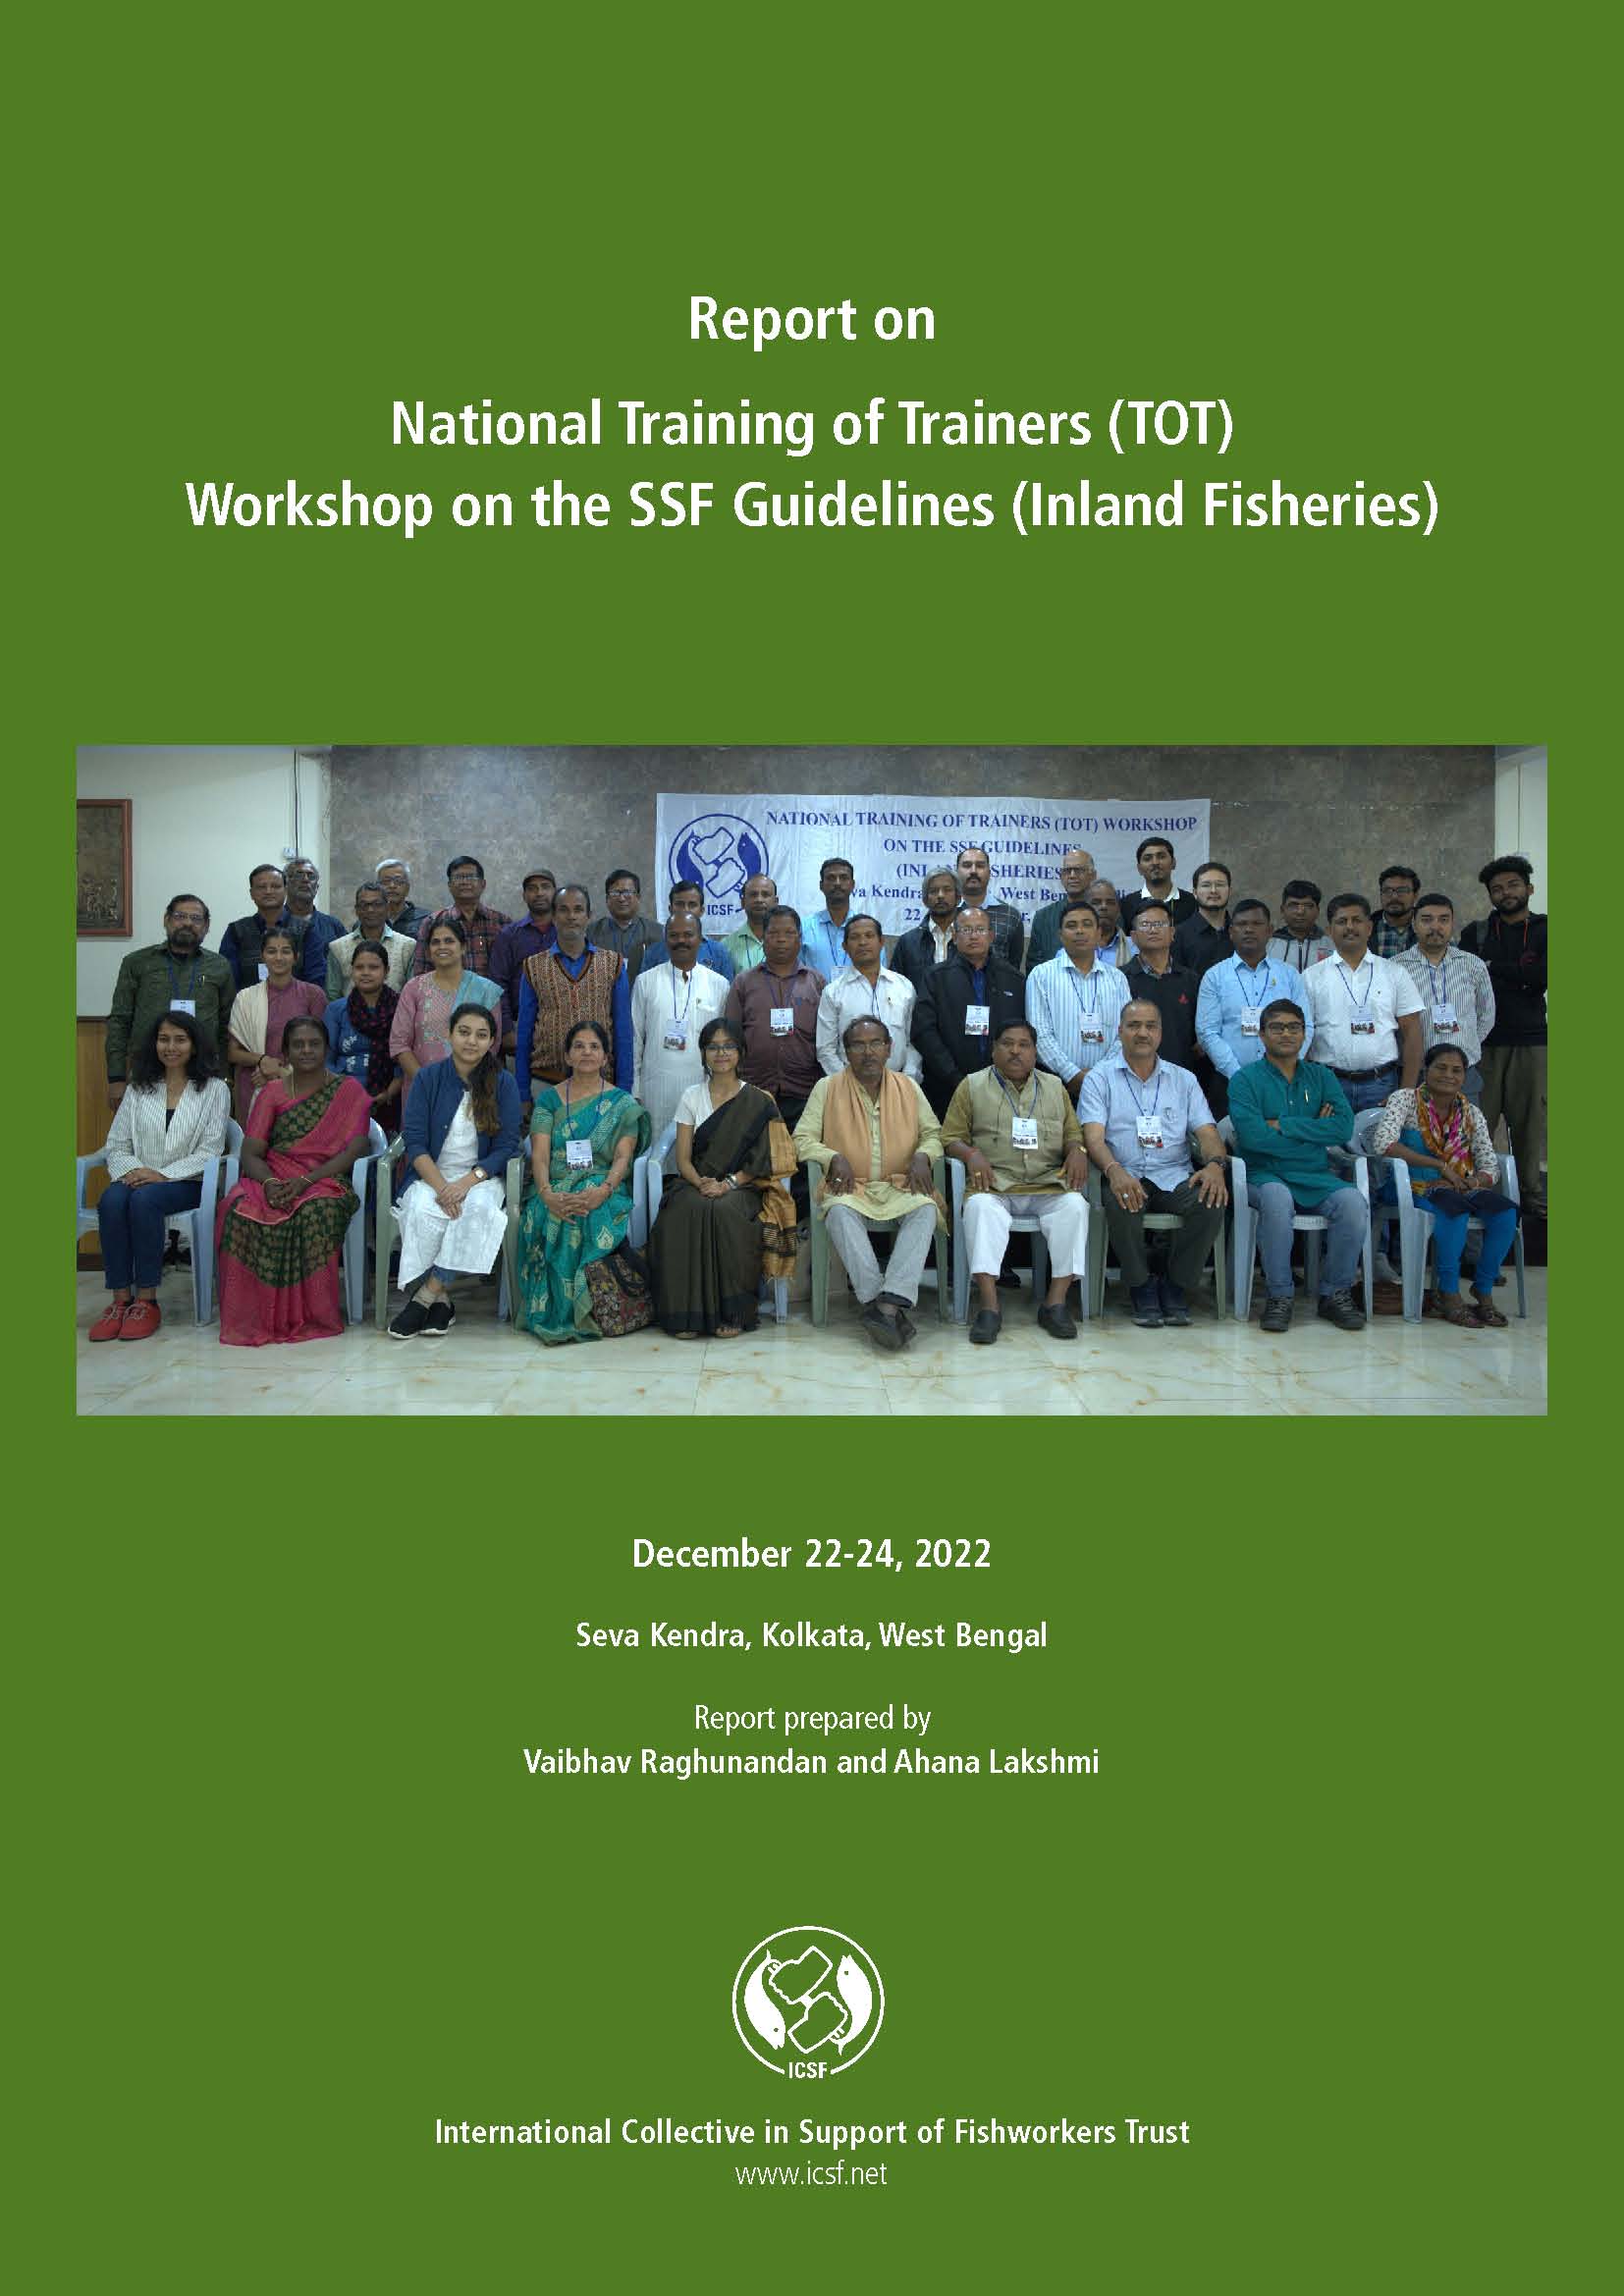 Report on National Training of Trainers (TOT) Workshop on the SSF Guidelines (Inland Fisheries), December 22-24, 2022, Seva Kendra, Kolkata, West Bengal by Vaibhav Raghunandan and Ahana Lakshmi